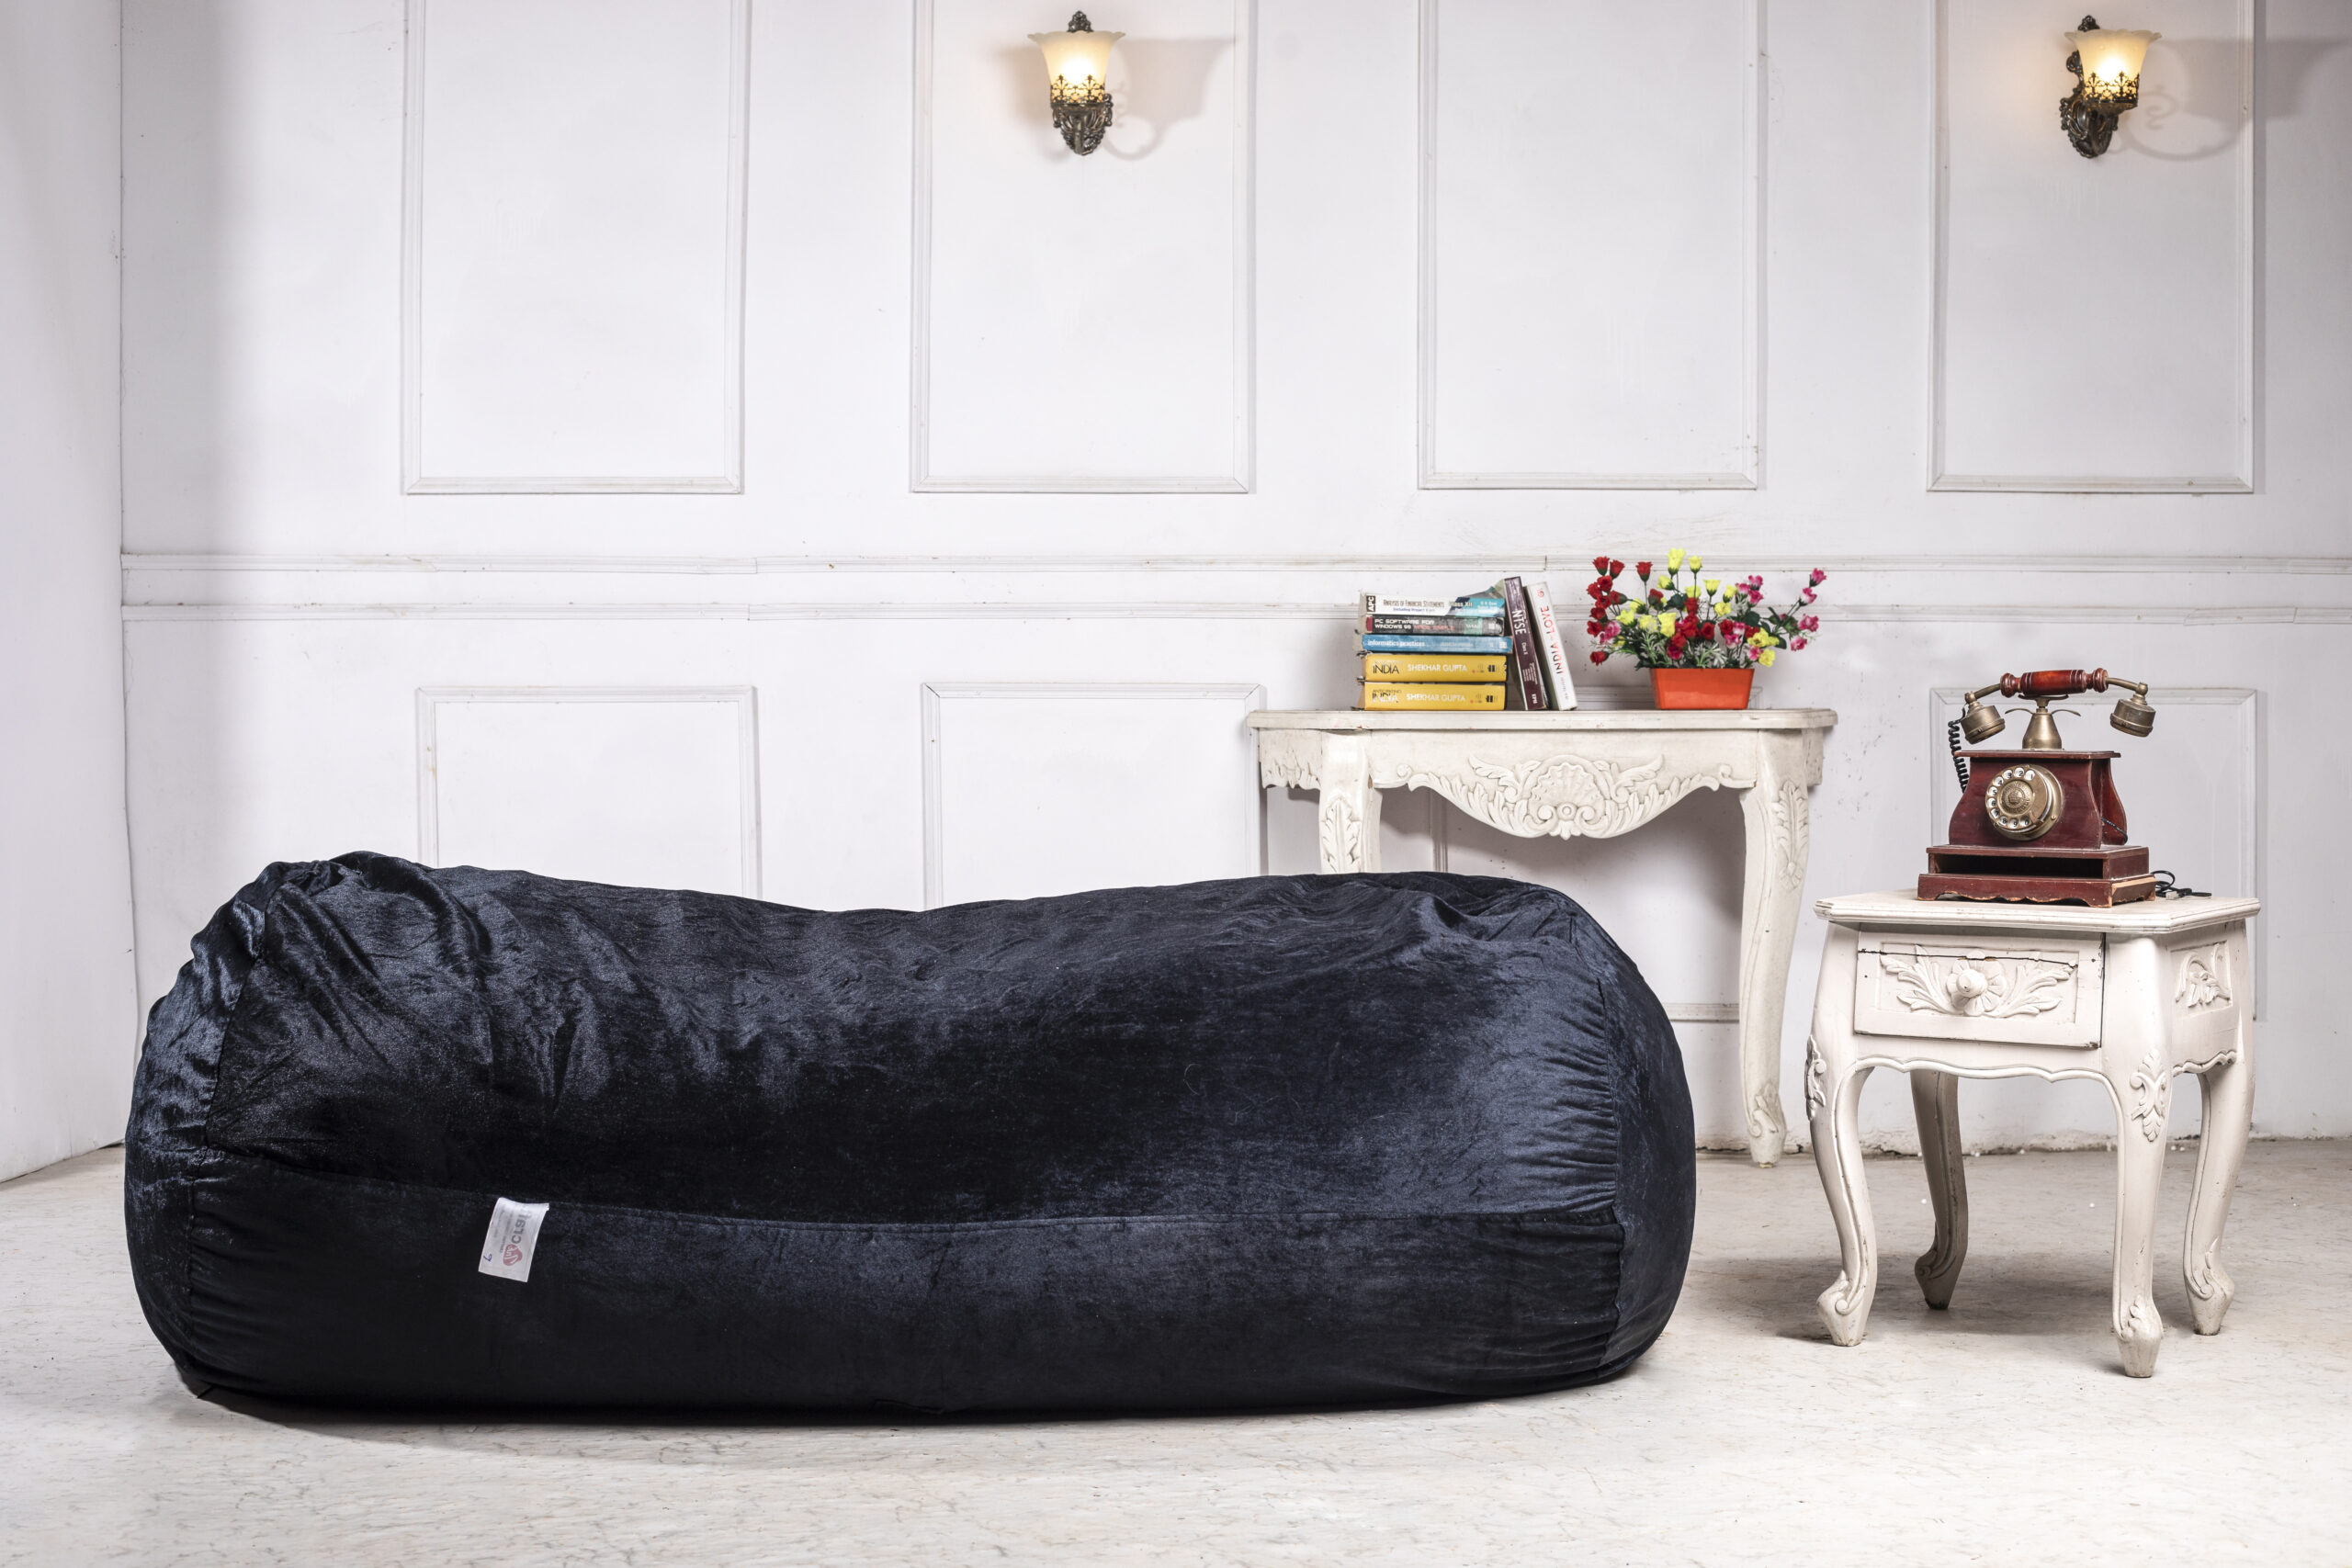 Huge - Giant Bean Bag Chair - Chinchilla | CordaRoy's Convertible Bean Bags